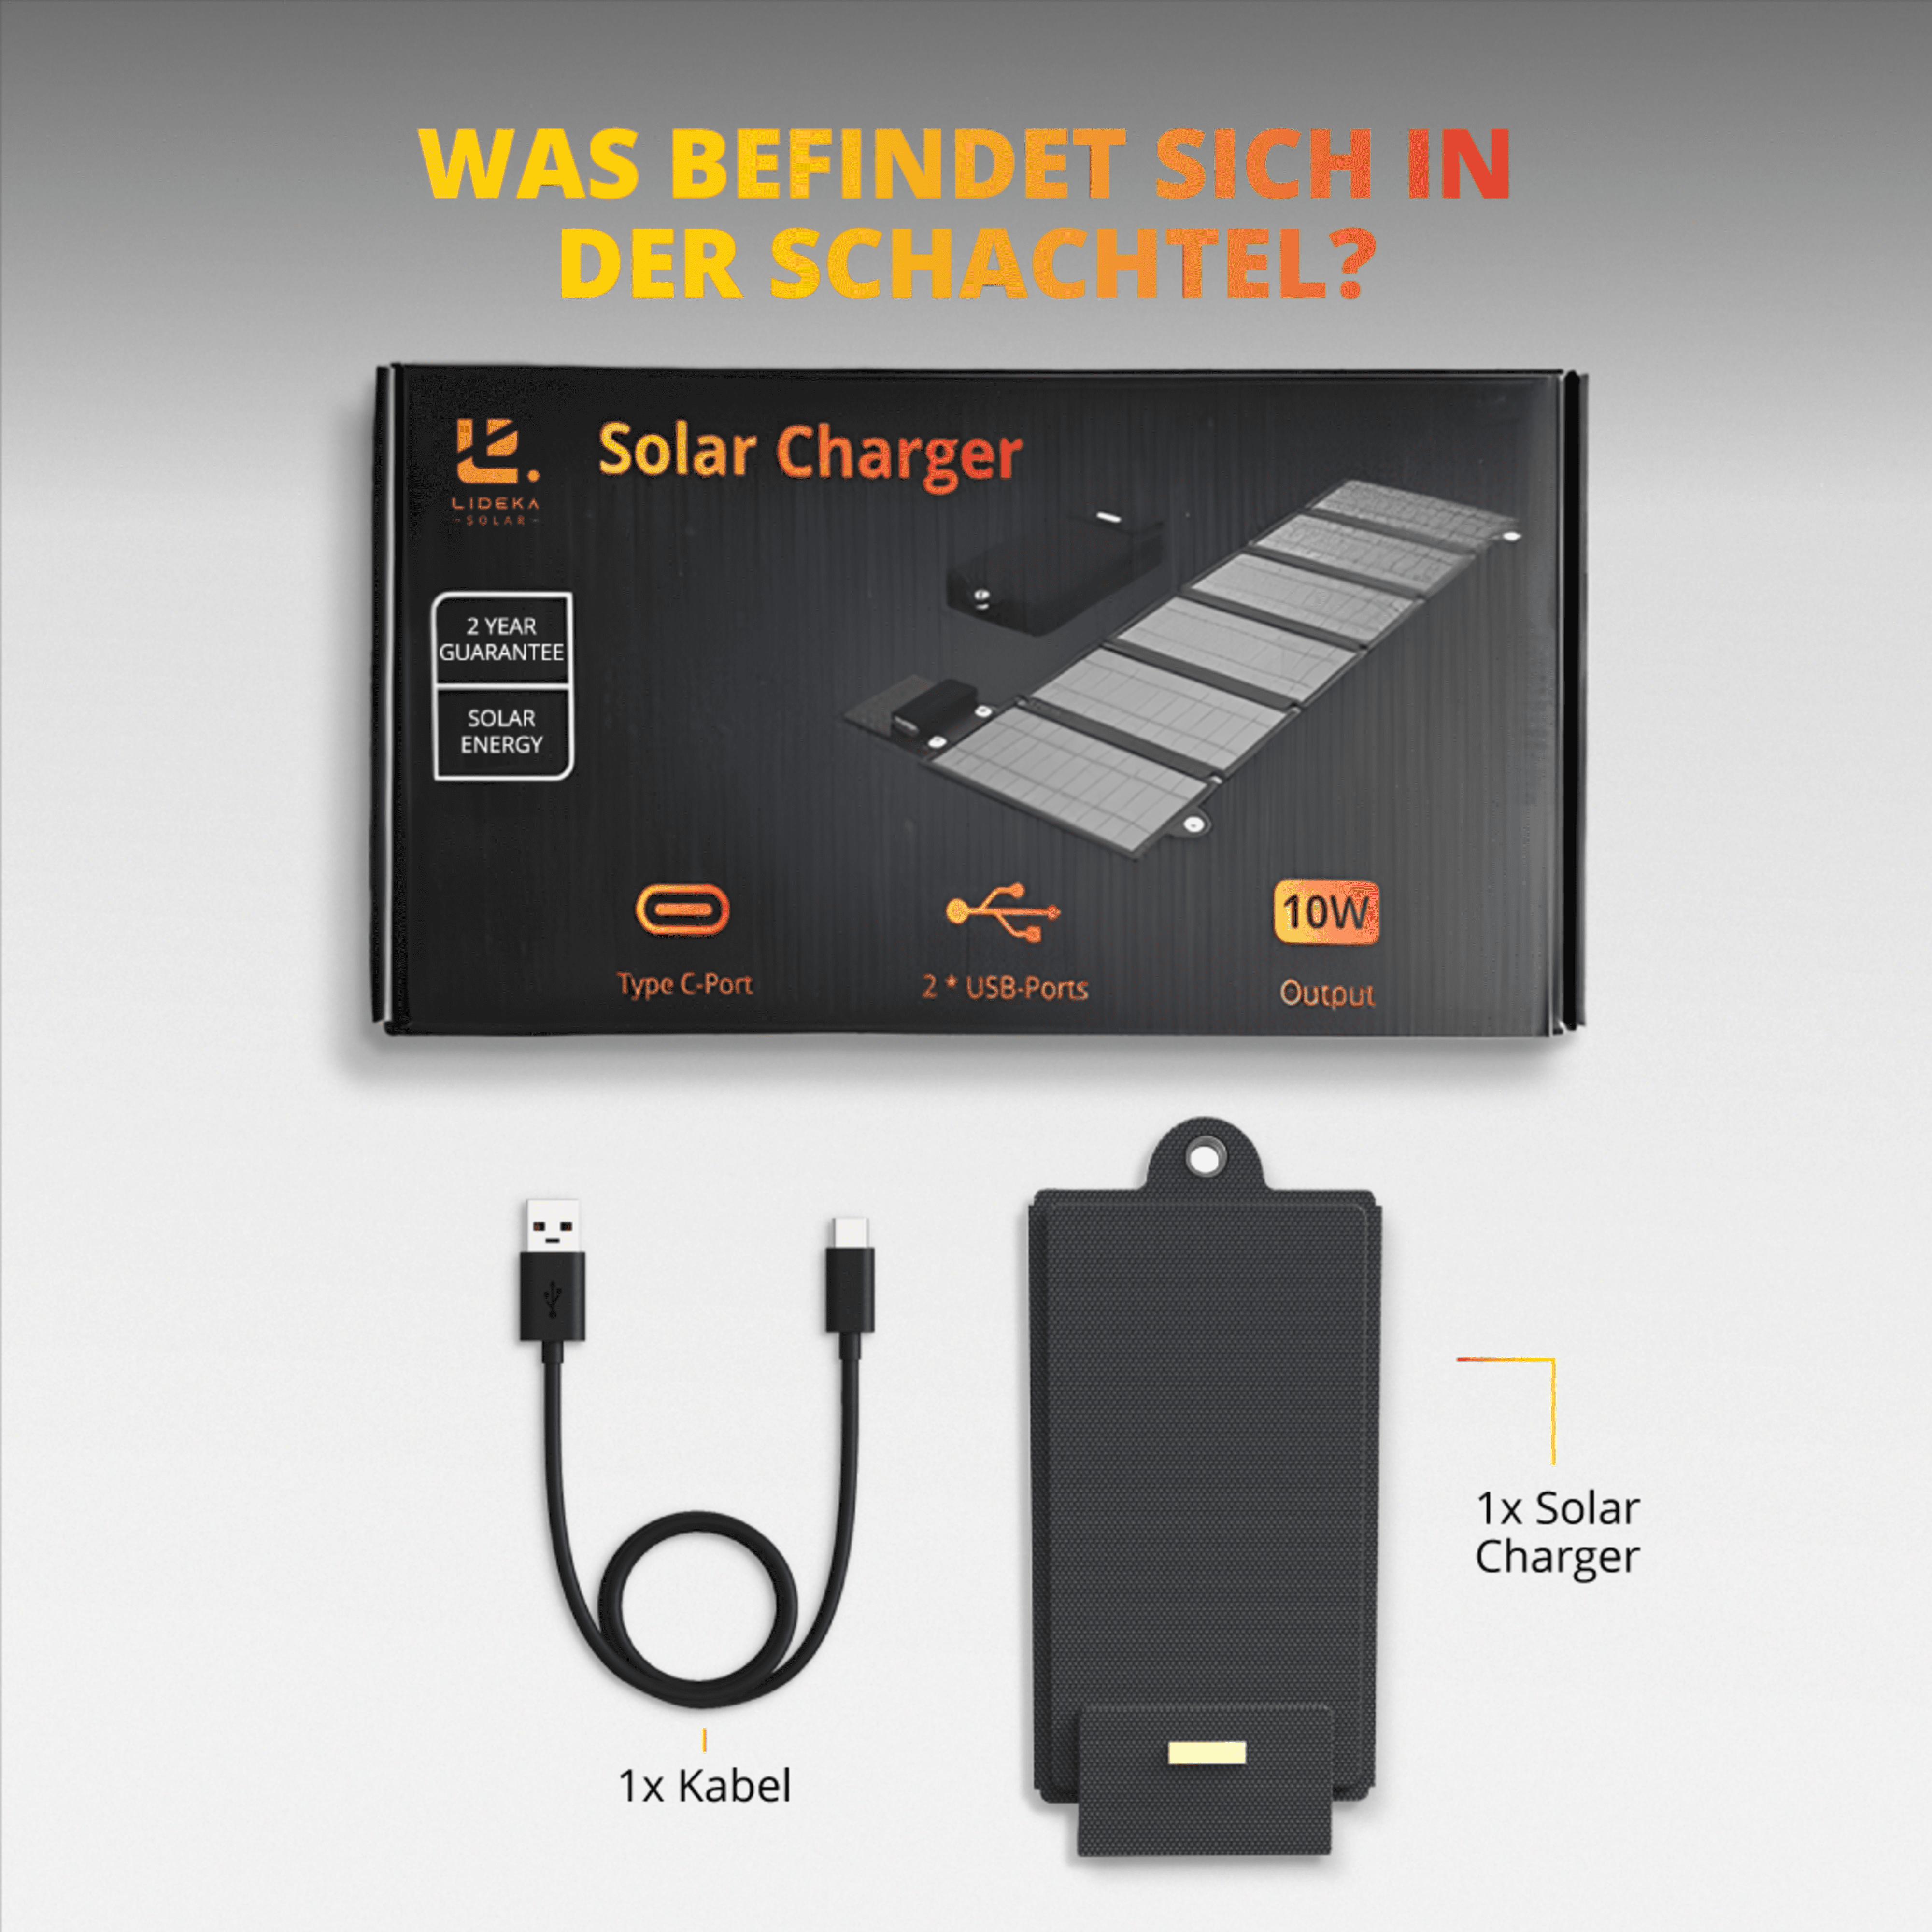 LIDEKA Solar Black Powerbank 2400mAh Charger Bank